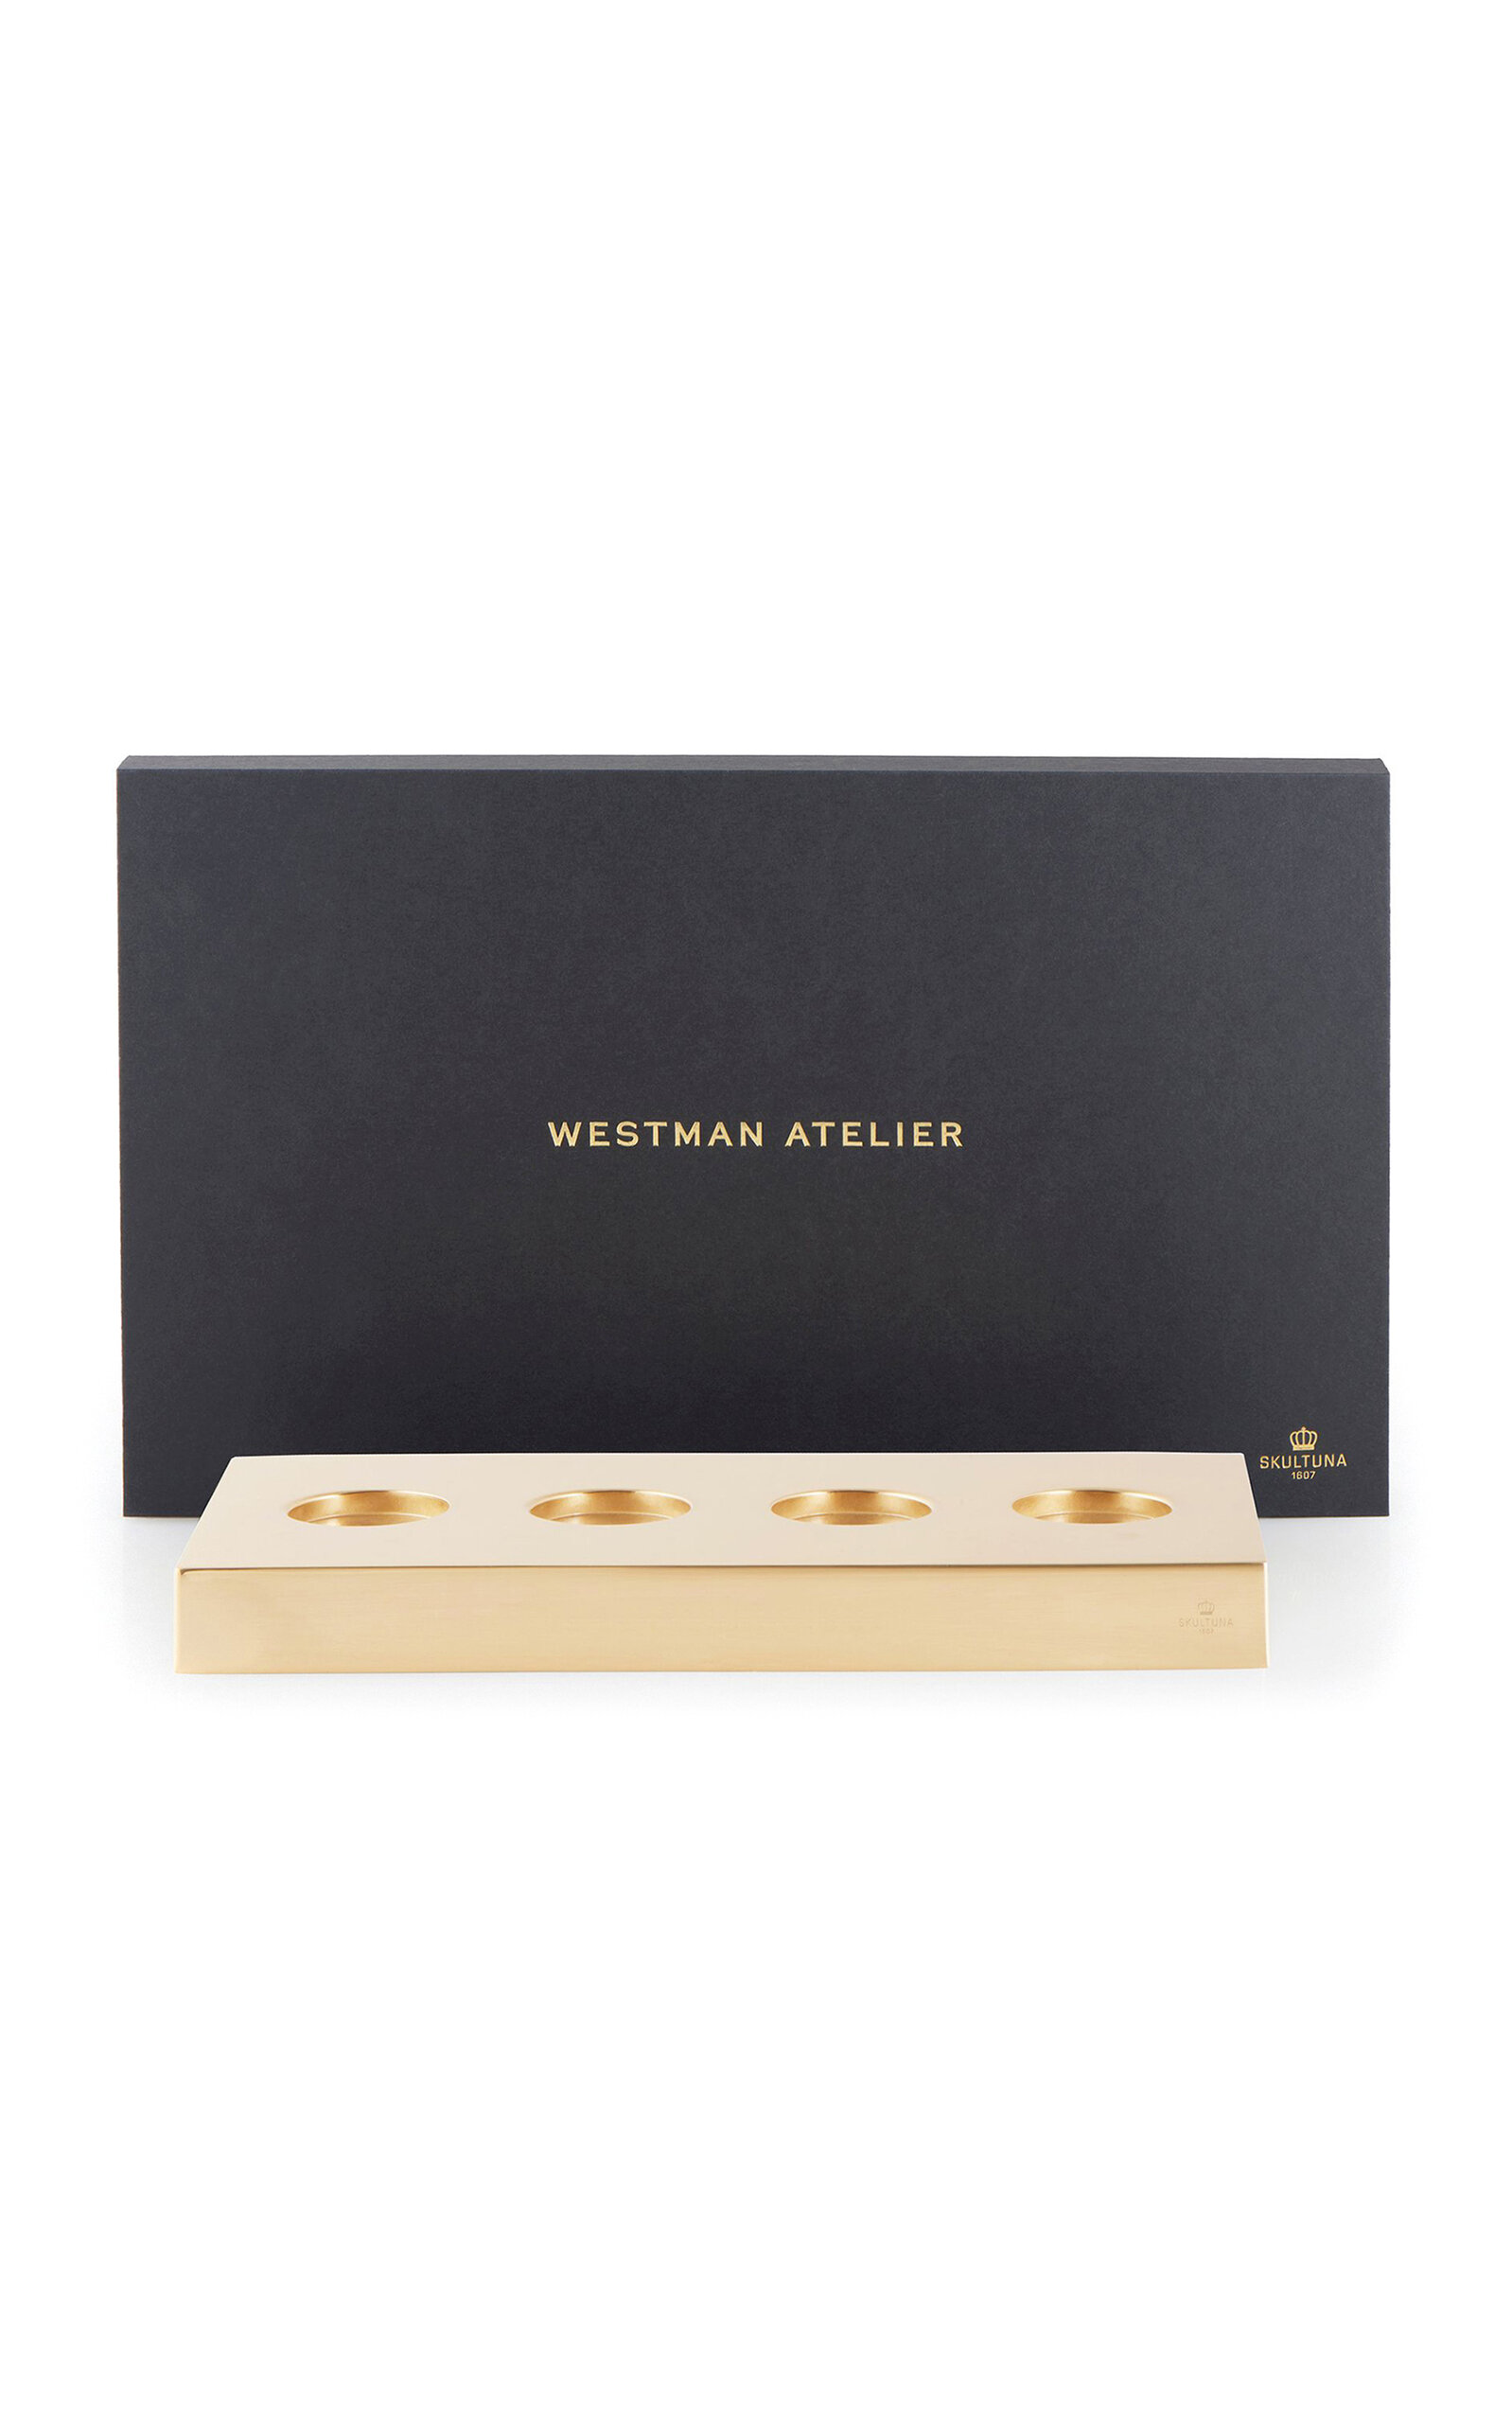 Westman Atelier Gold